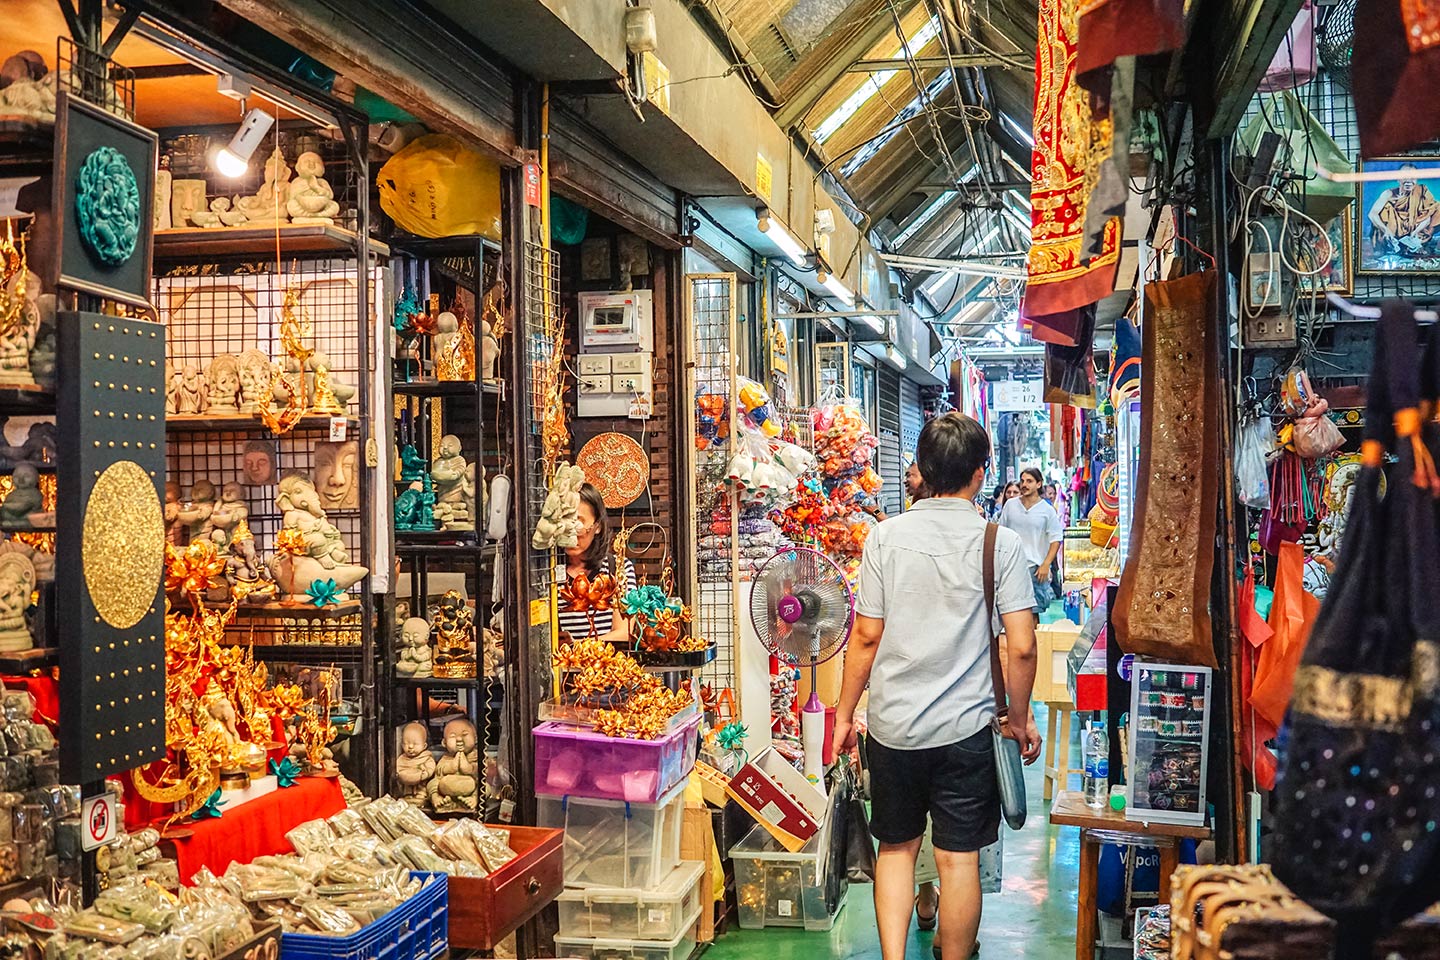  Mercado de fin de semana de Chatuchak en Bangkok - la guía definitiva